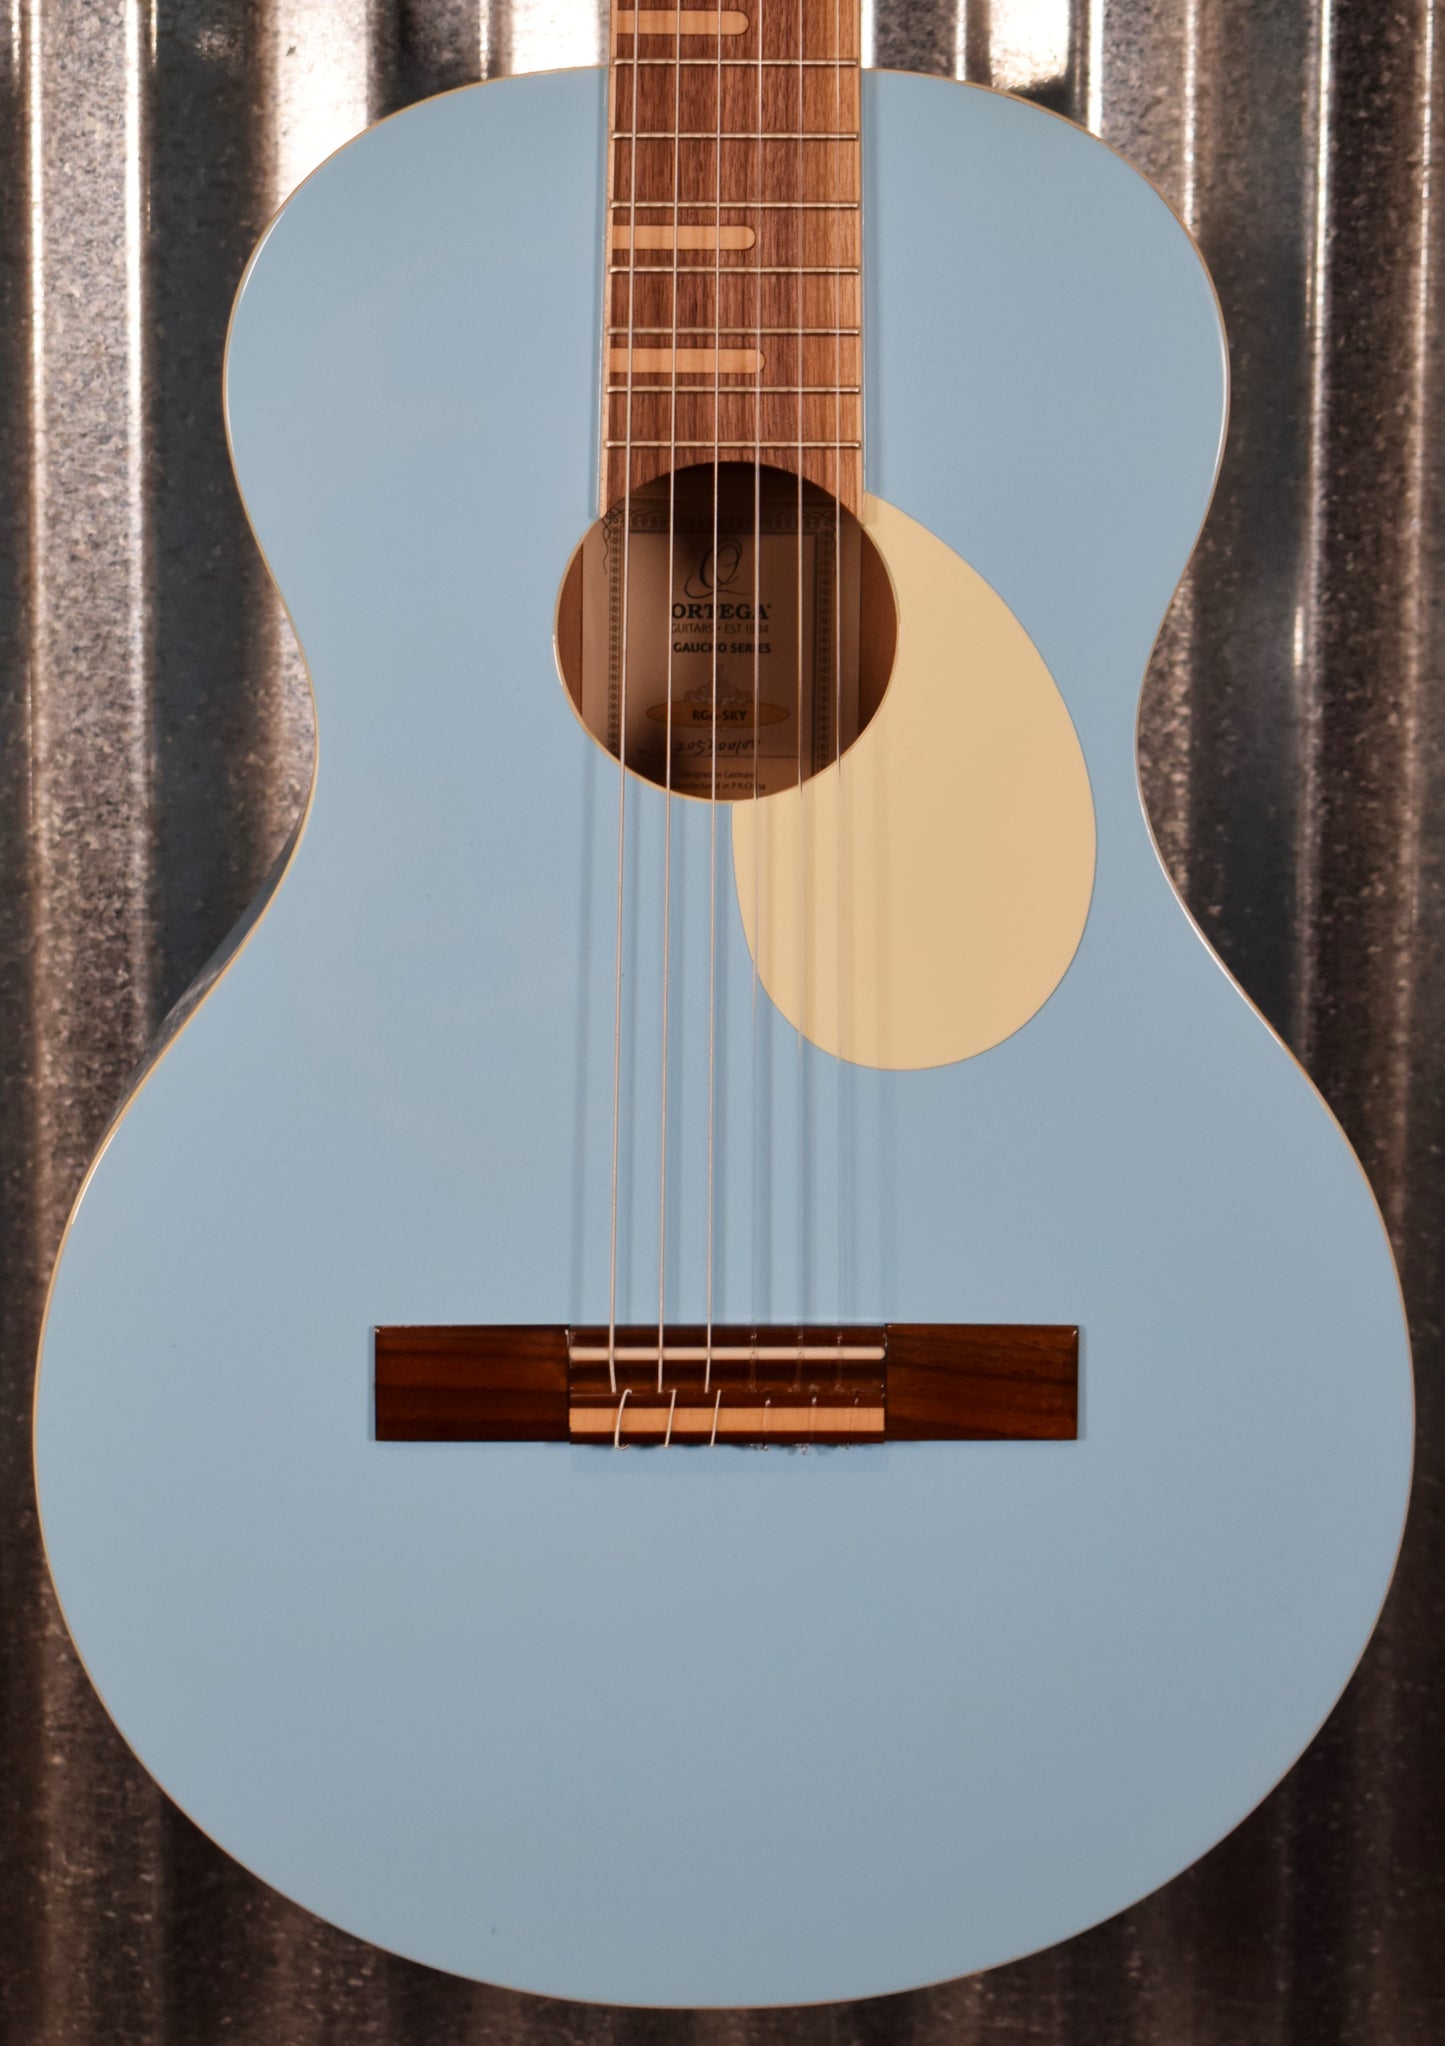 Ortega RGA-SKY Gaucho Acoustic Nylon String Parlor Sky Blue Guitar & Bag #0100